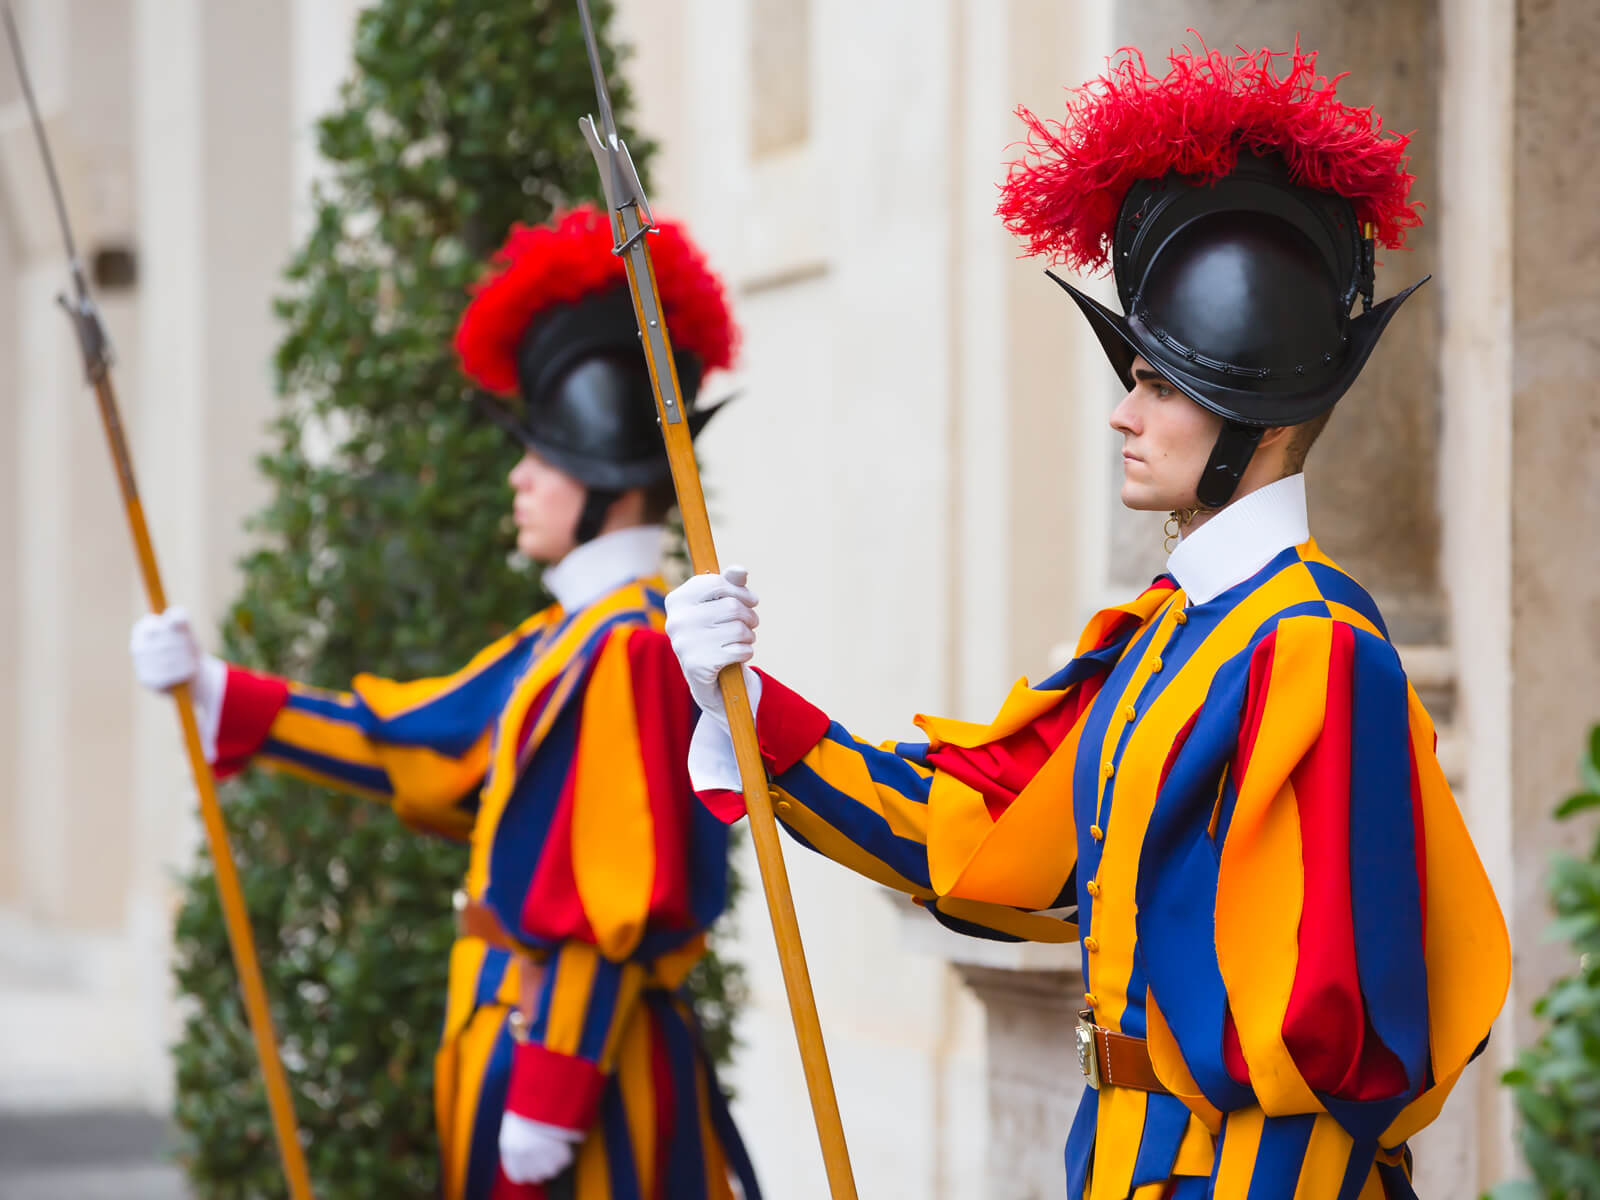 Papal Swiss Guard Uniforms